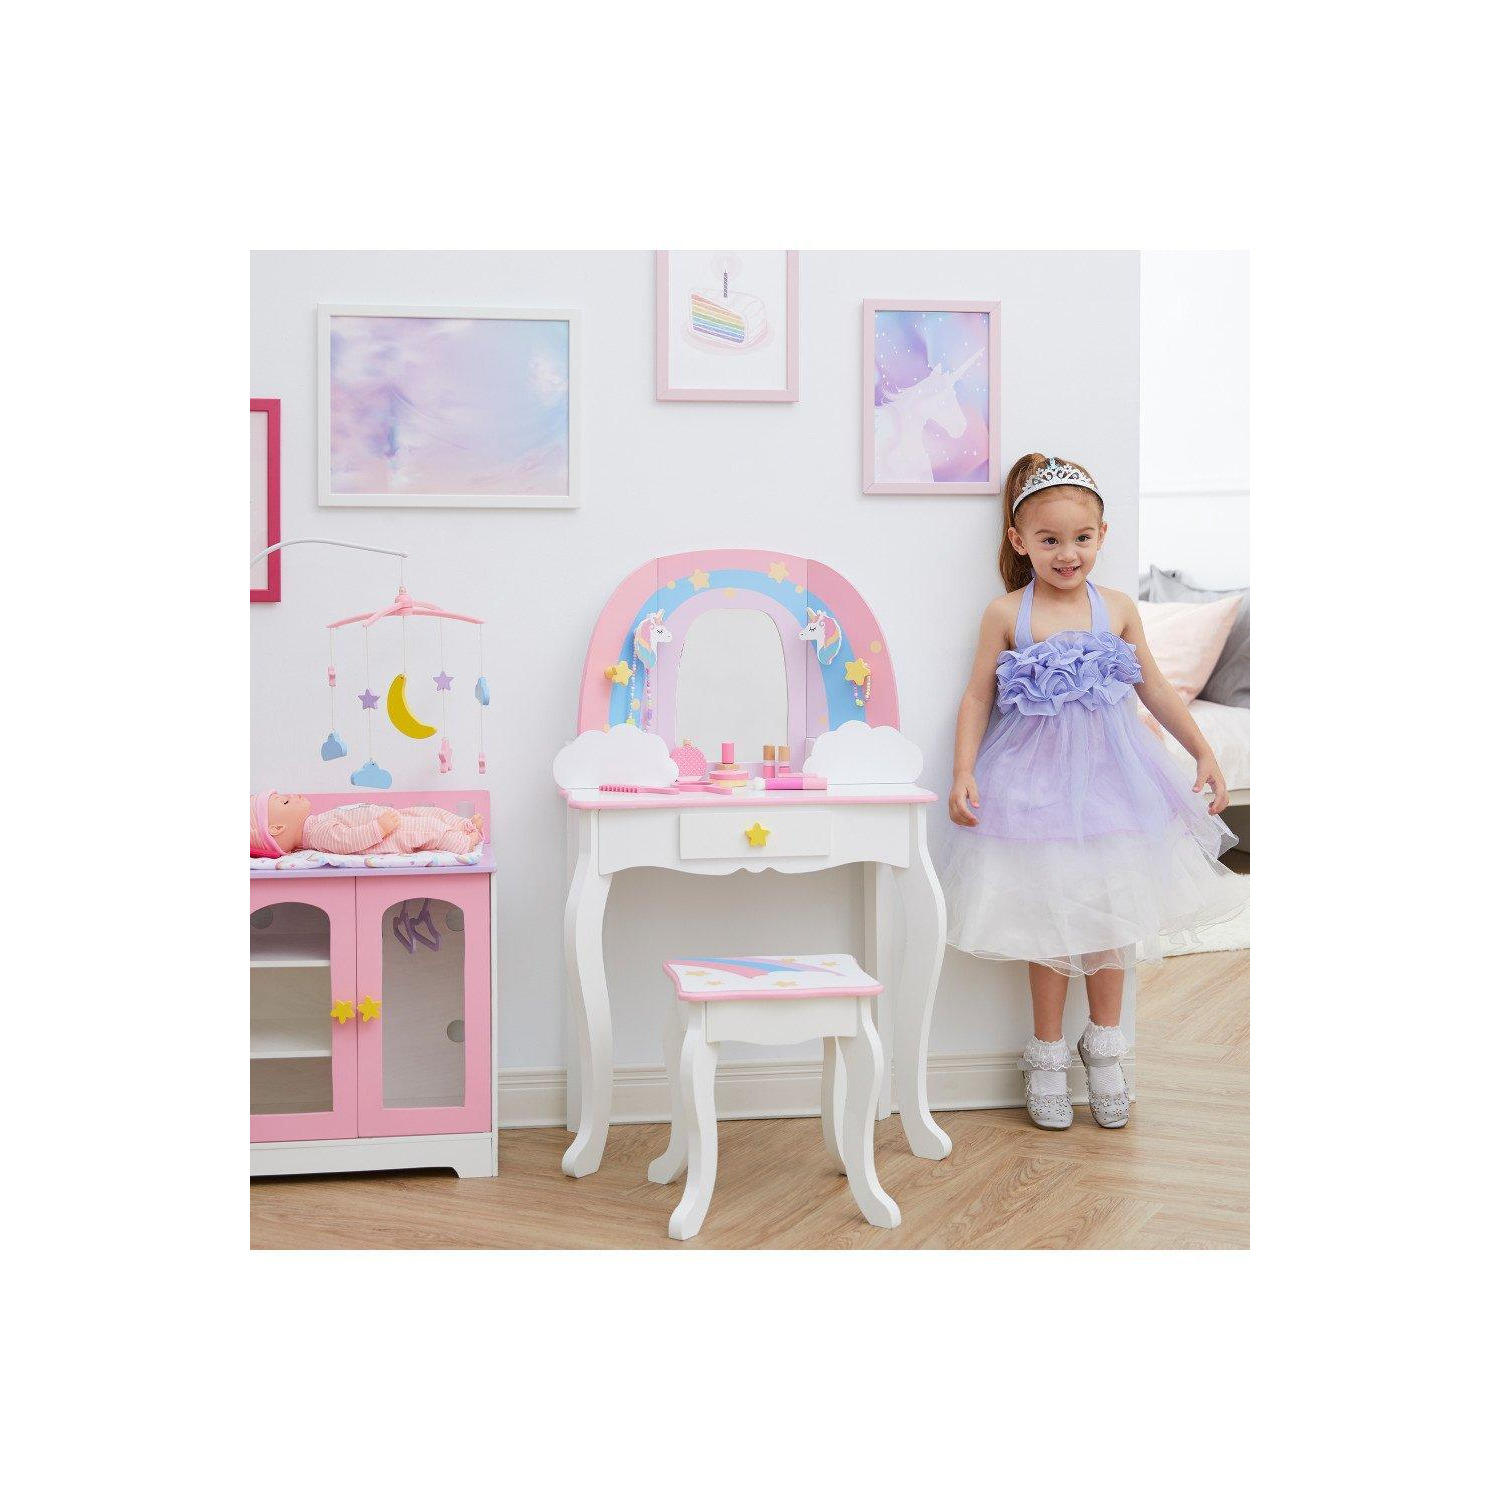 Teamson Kids Little Dreamer Rainbow Unicorn 2-pc. Wooden Vanity Set, Pink/White - image 1